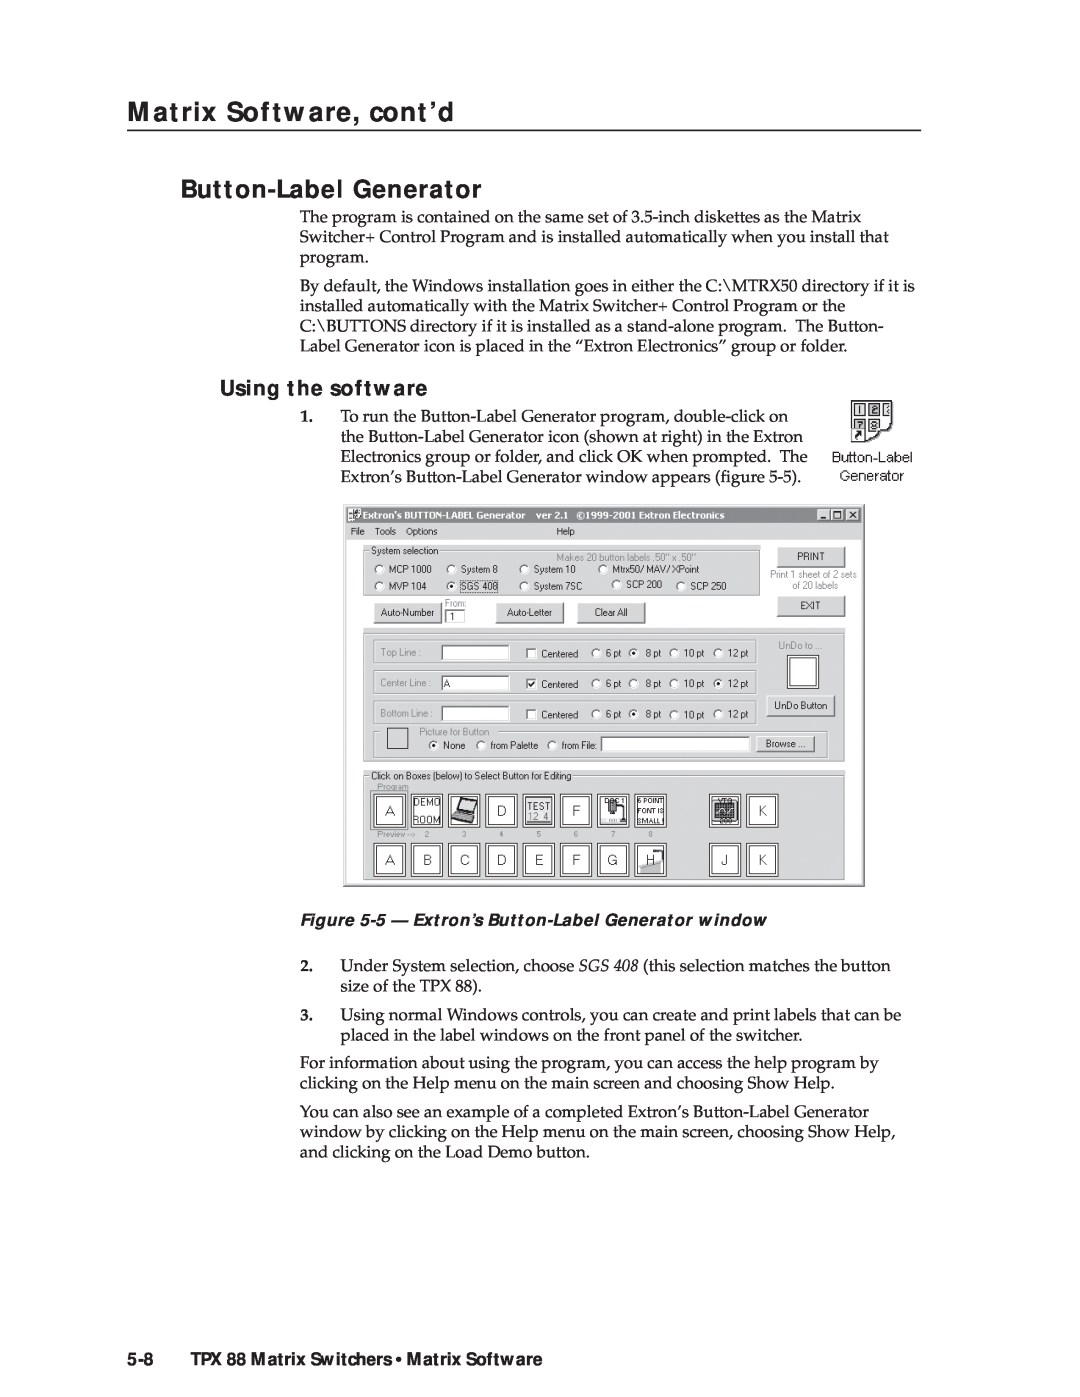 Extron electronic TPX 88 A 5 - Extron’s Button-Label Generator window, TPX 88 Matrix Switchers Matrix Software 